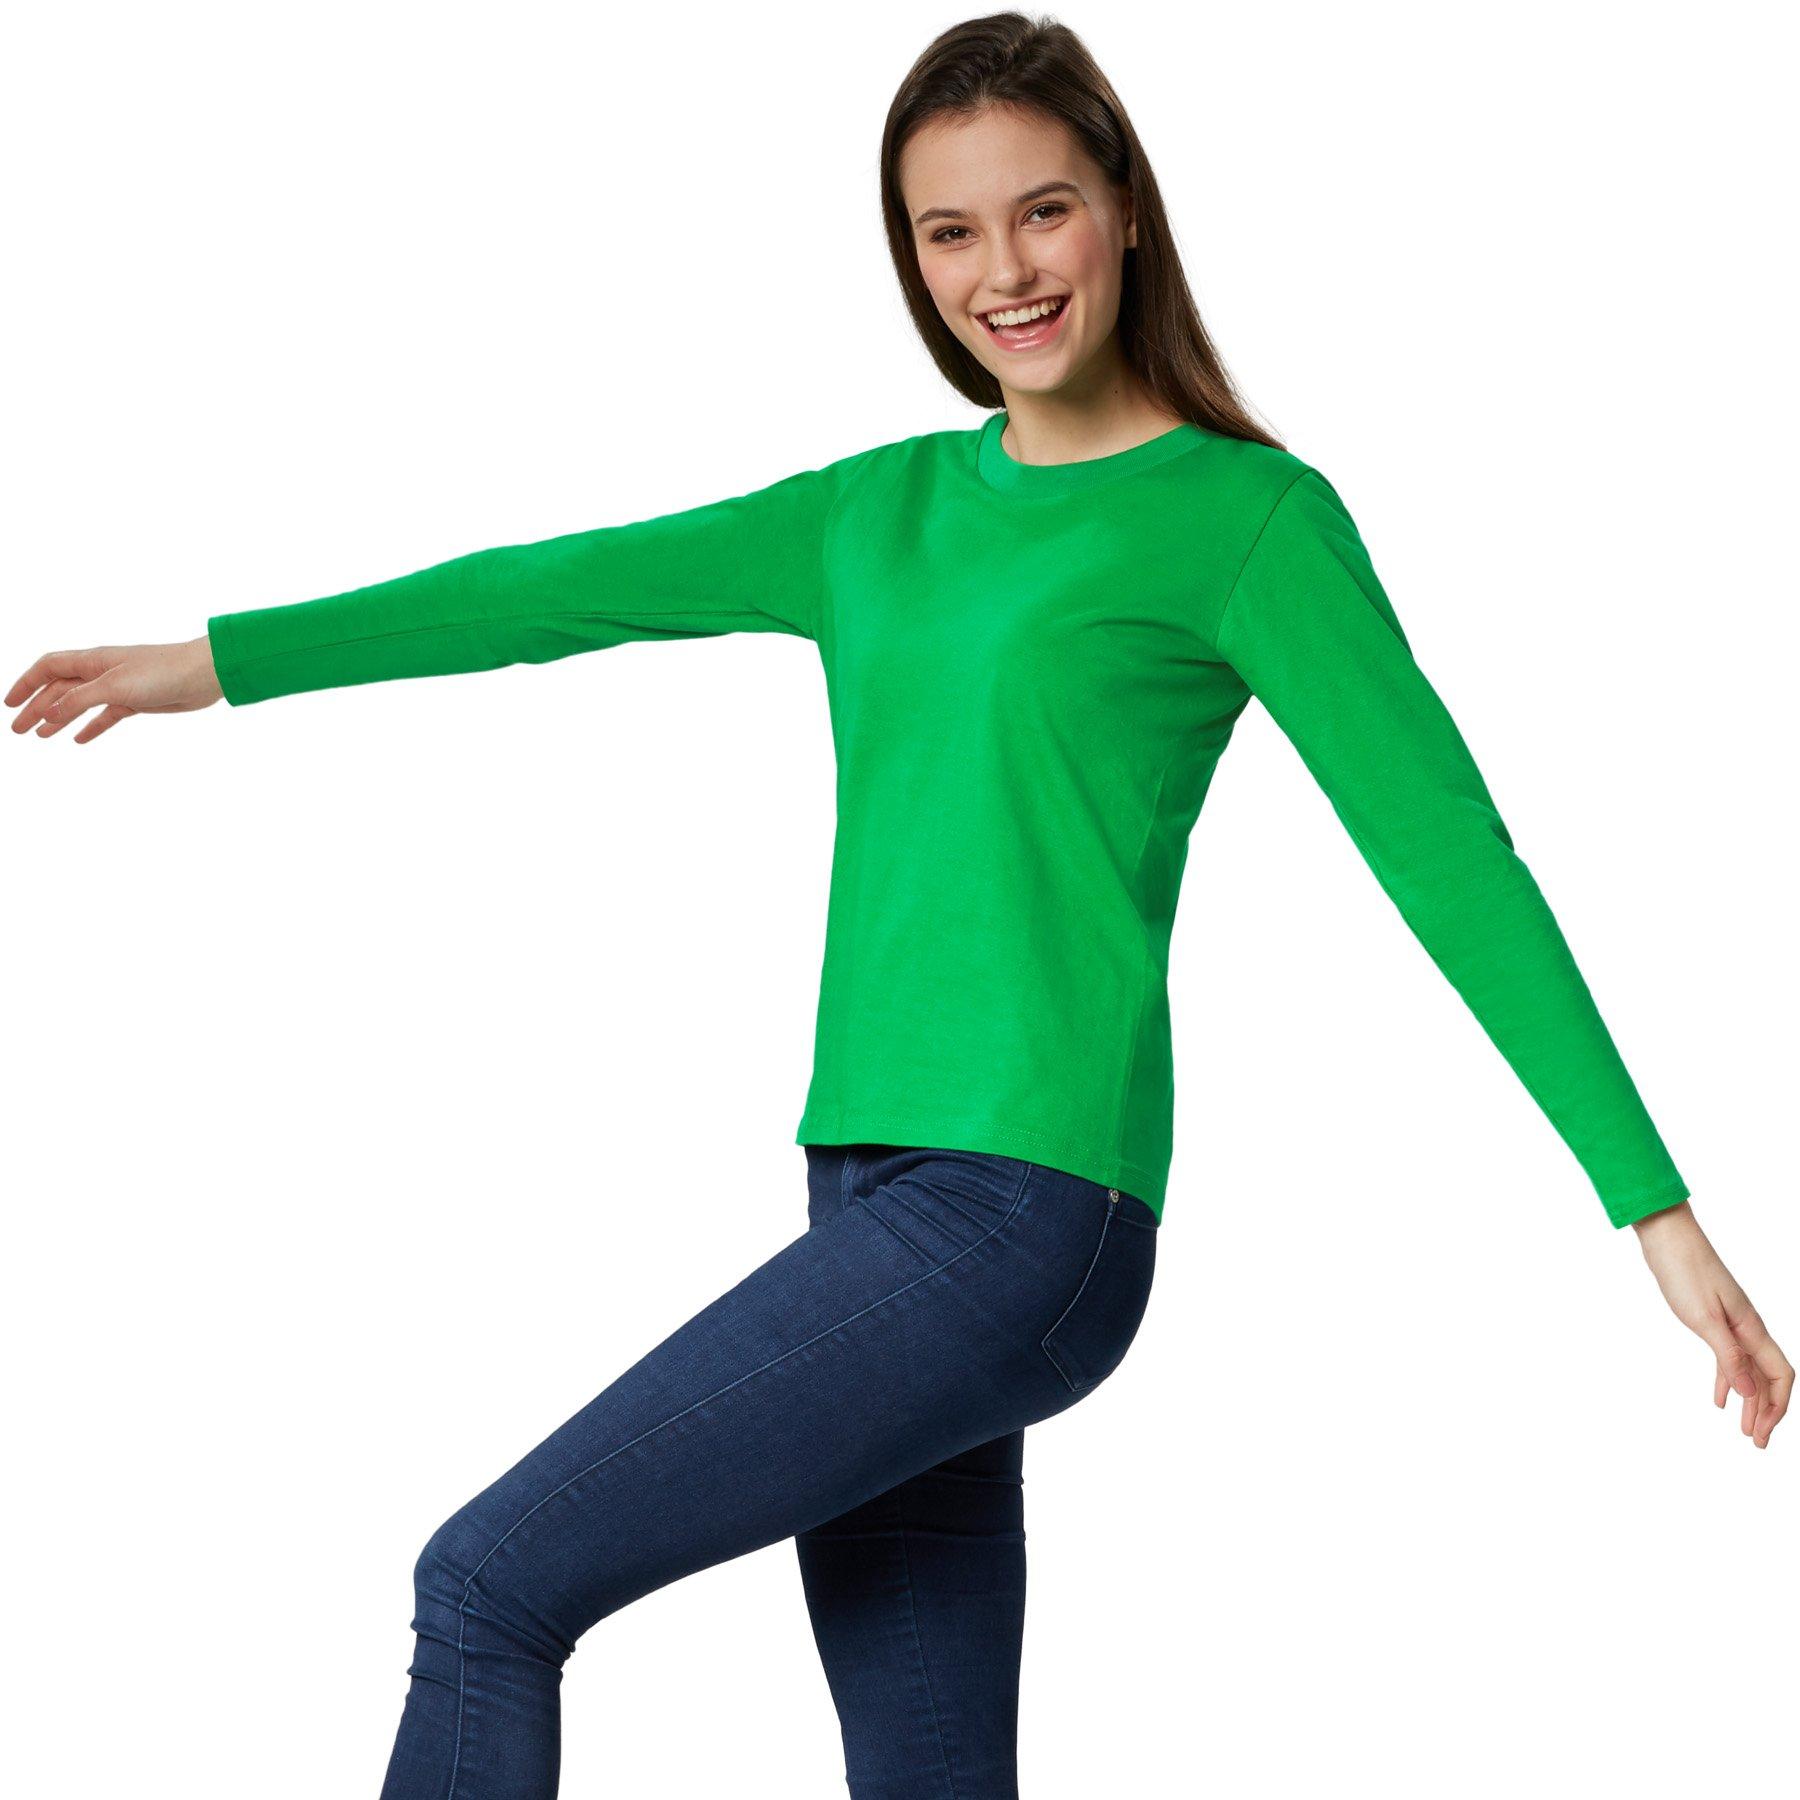 Langarm-shirt Frauen Damen Grün S von Tectake